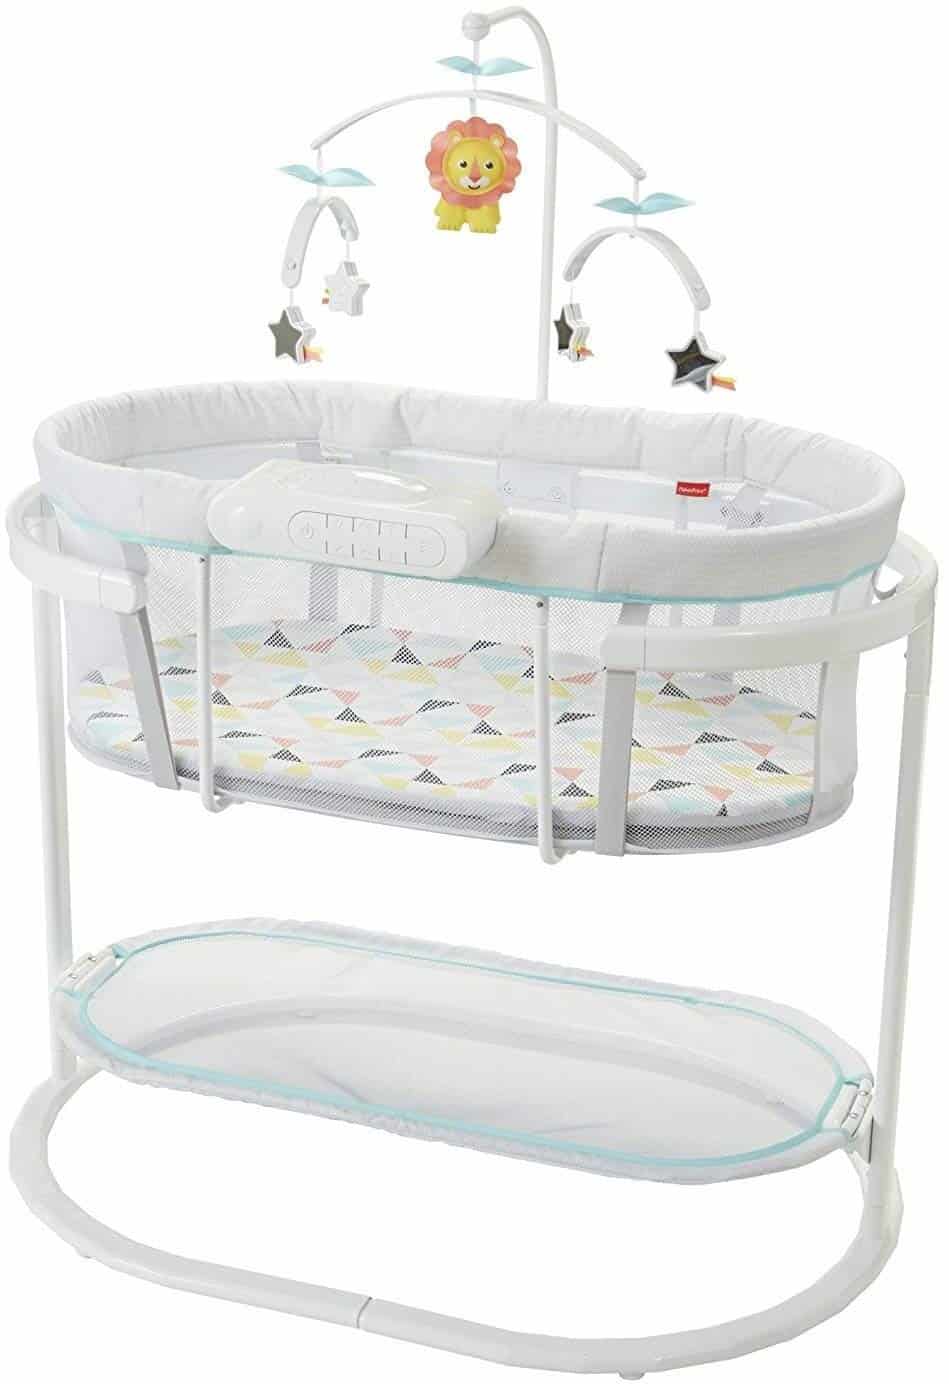 small bassinet for newborn